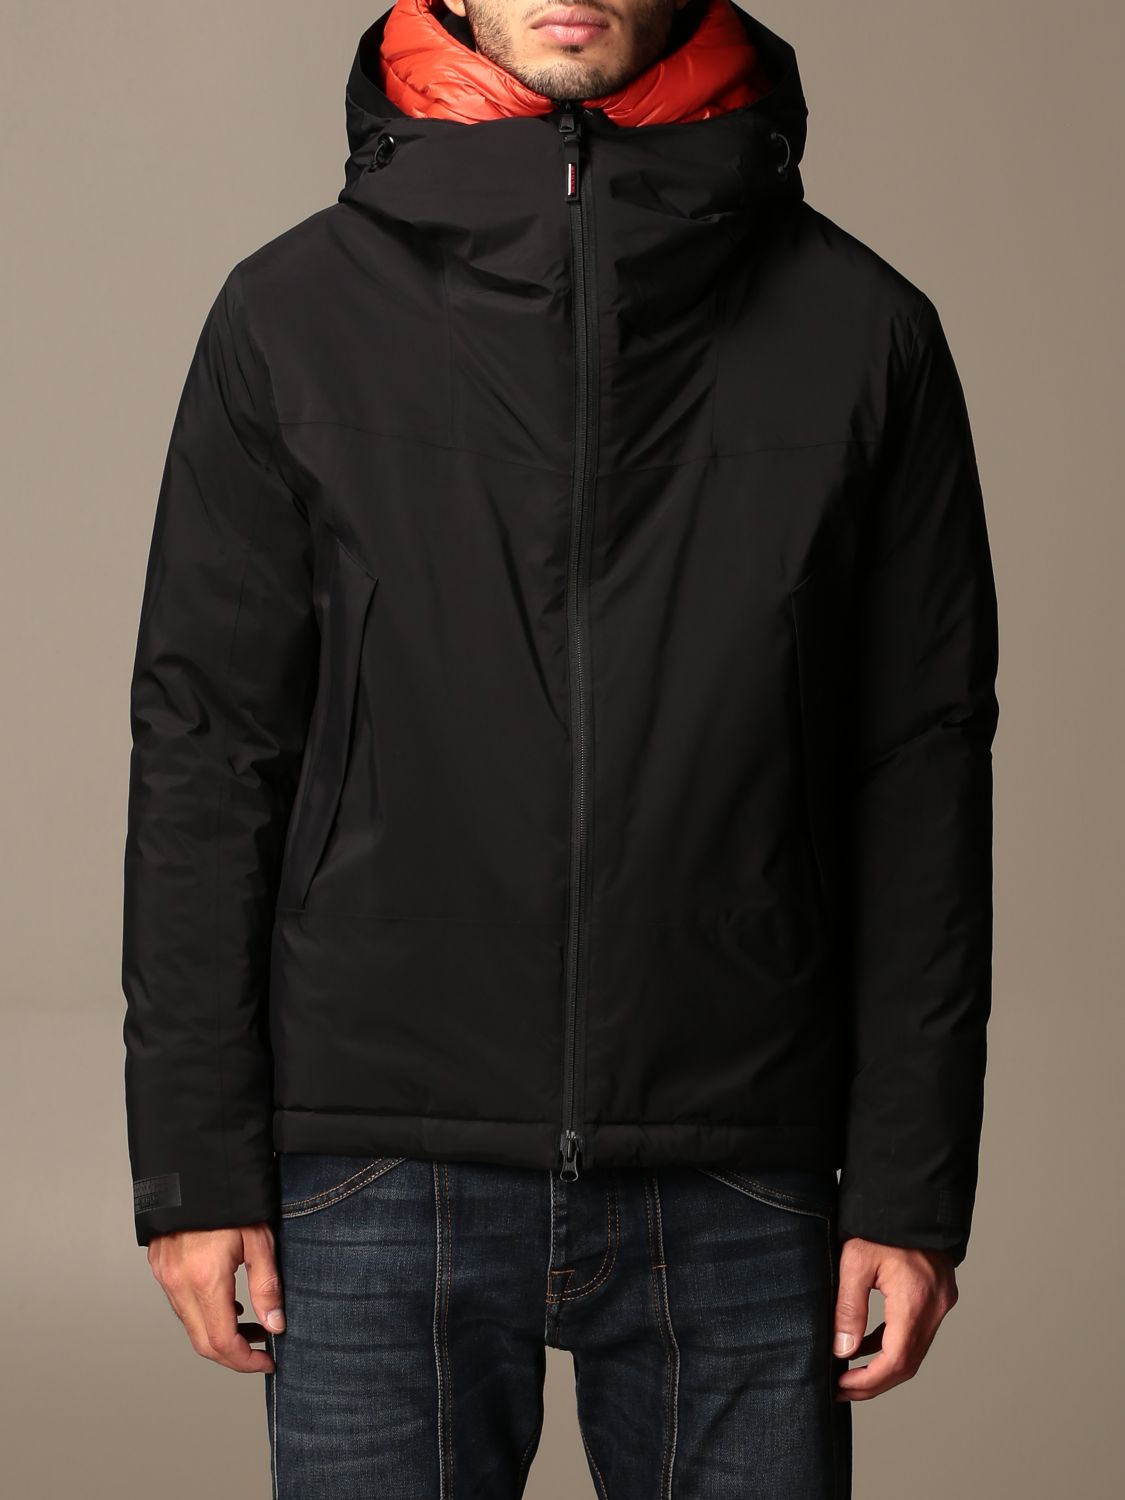 Anoi Gespecificeerd dier Napapijri Outlet: Fahrenheit s jacket with hood - Black | Napapijri jacket  NP0A4ER30411 online on GIGLIO.COM